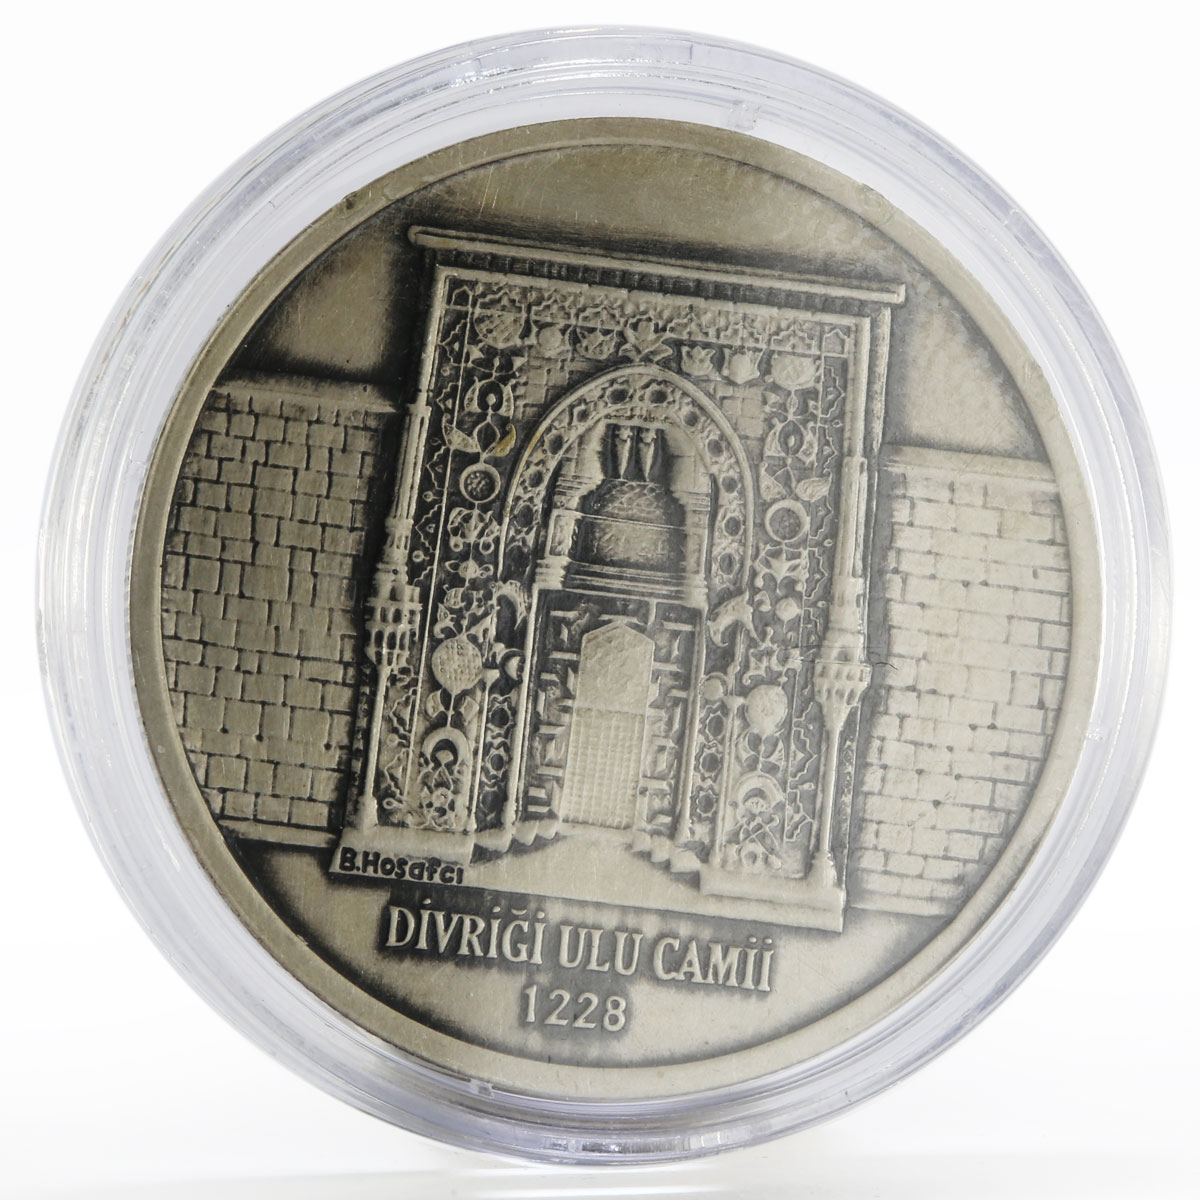 Turkey 10000000 lira Divigi Great Mosque Islam Religion Faith silver coin 2001